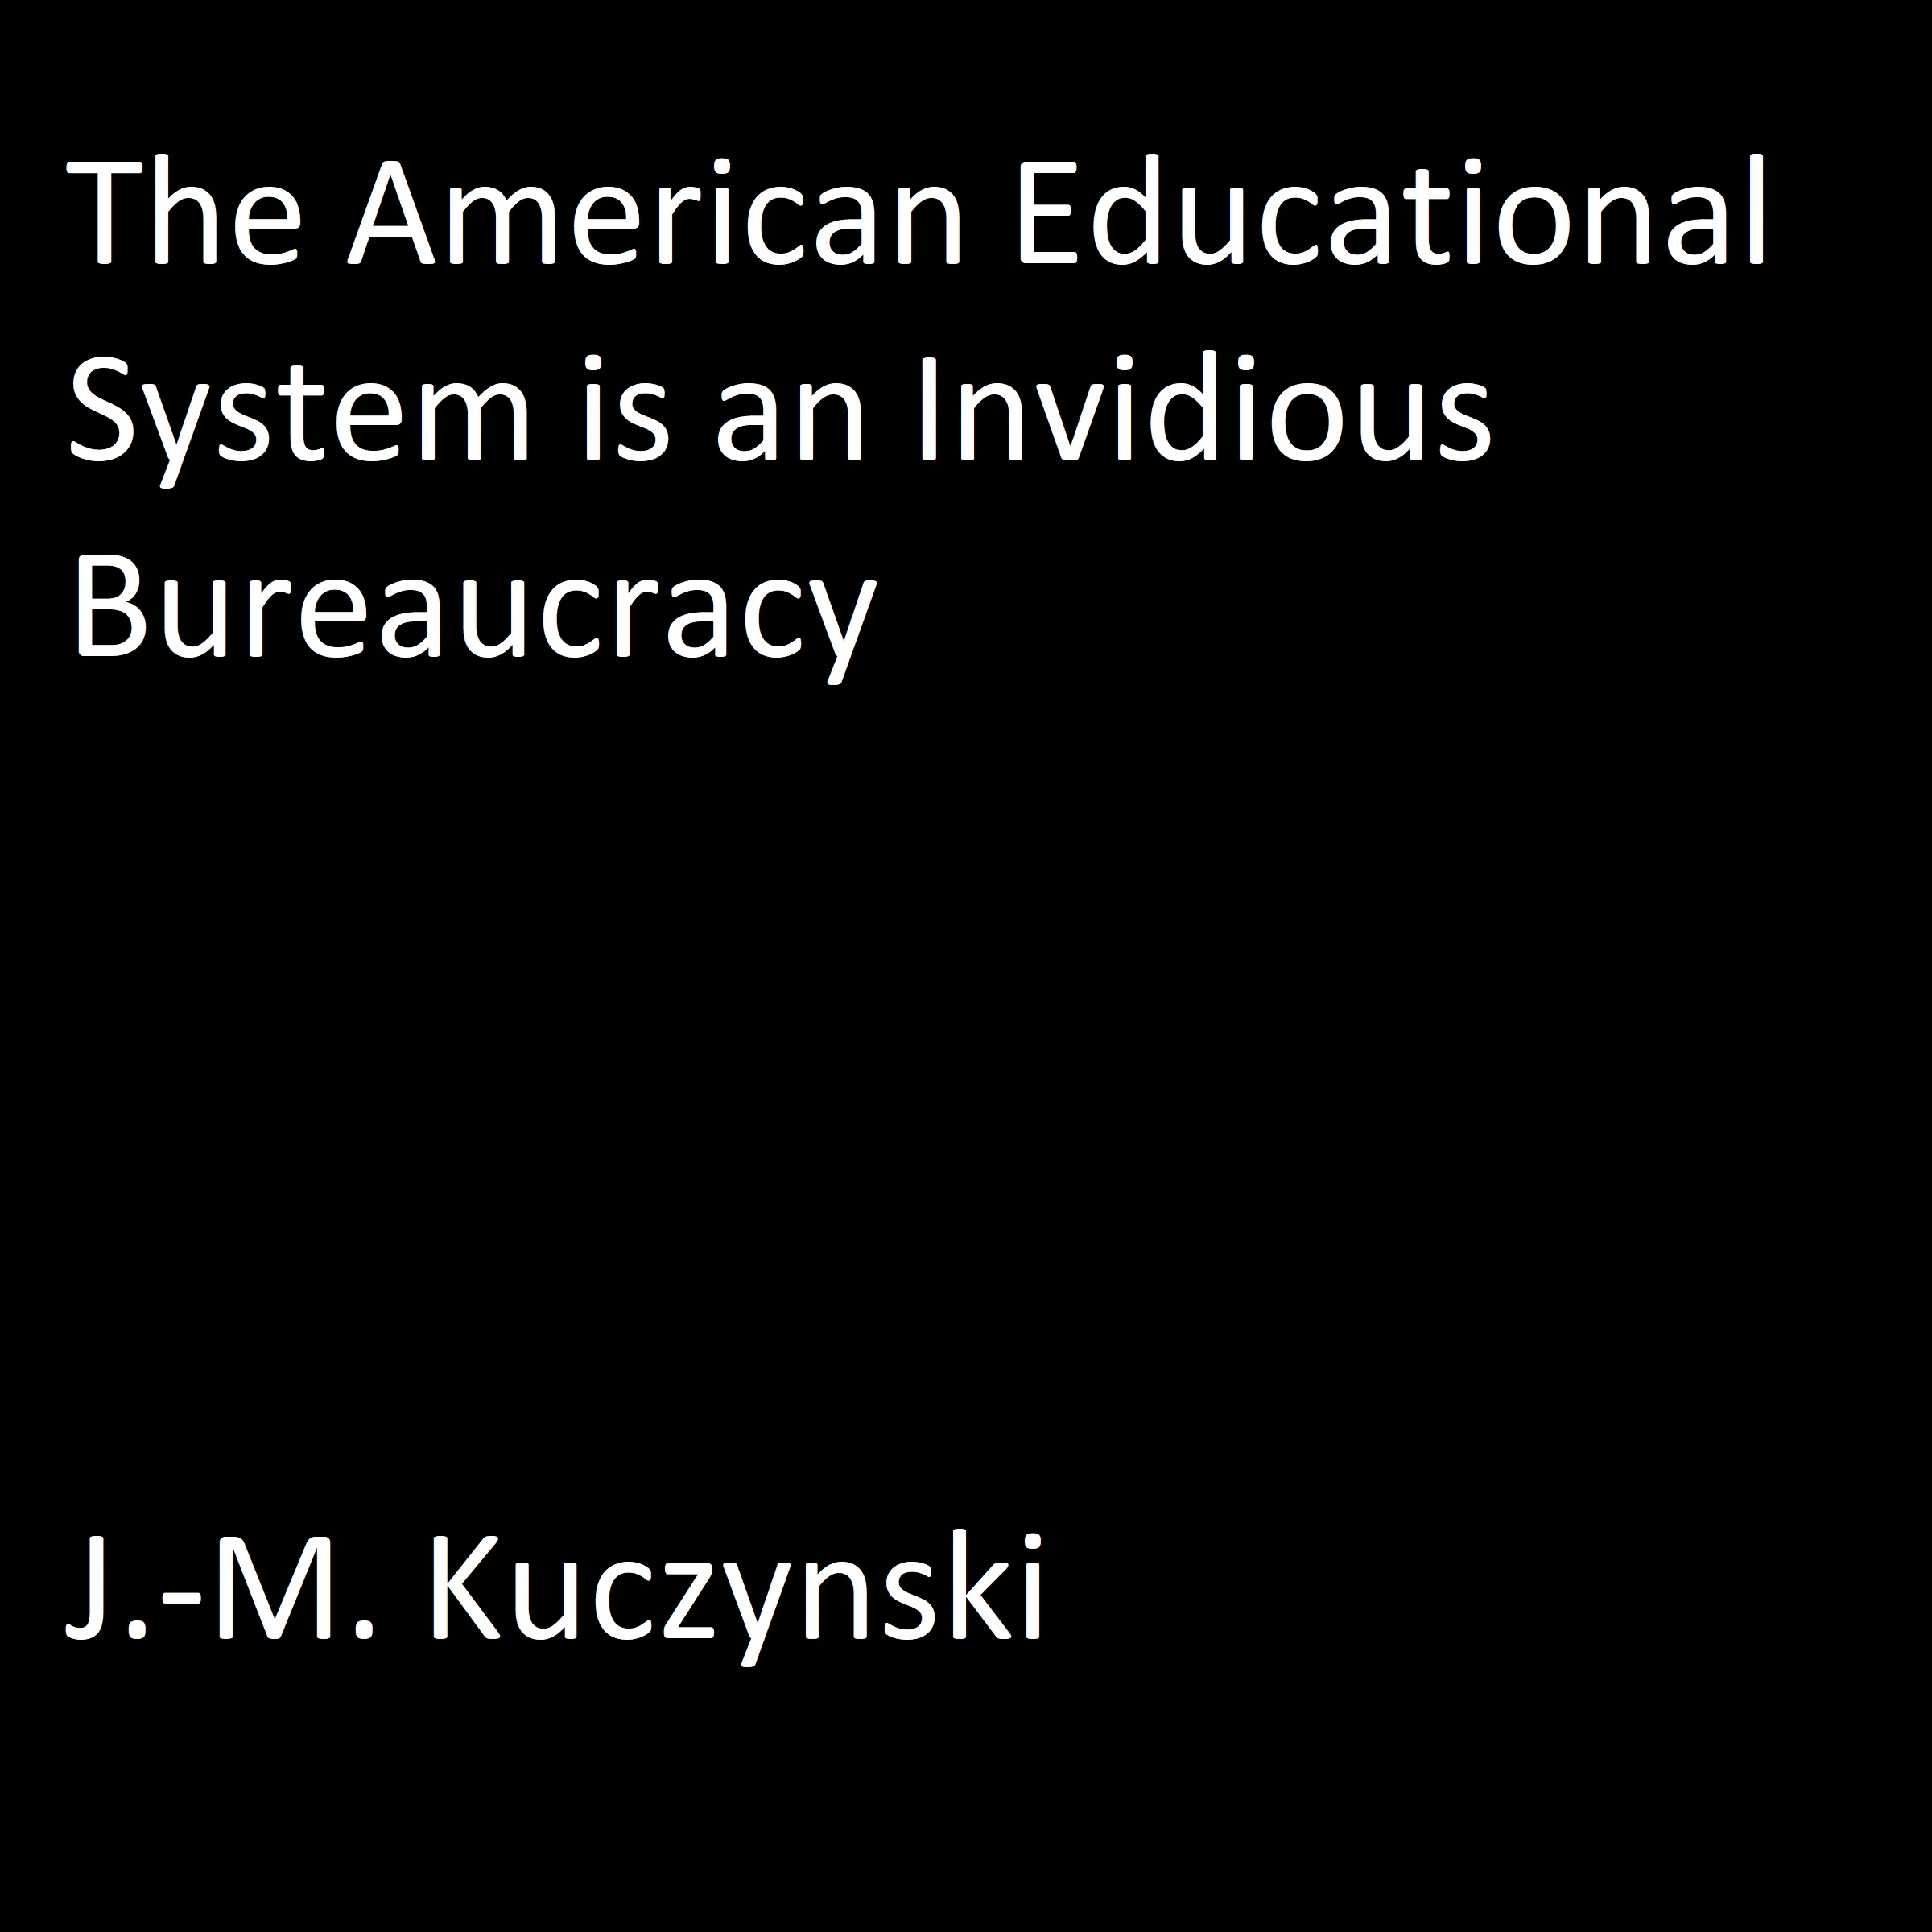 The American Educational System is an Invidious Bureaucracy Audiobook by J.-M. Kuczynski